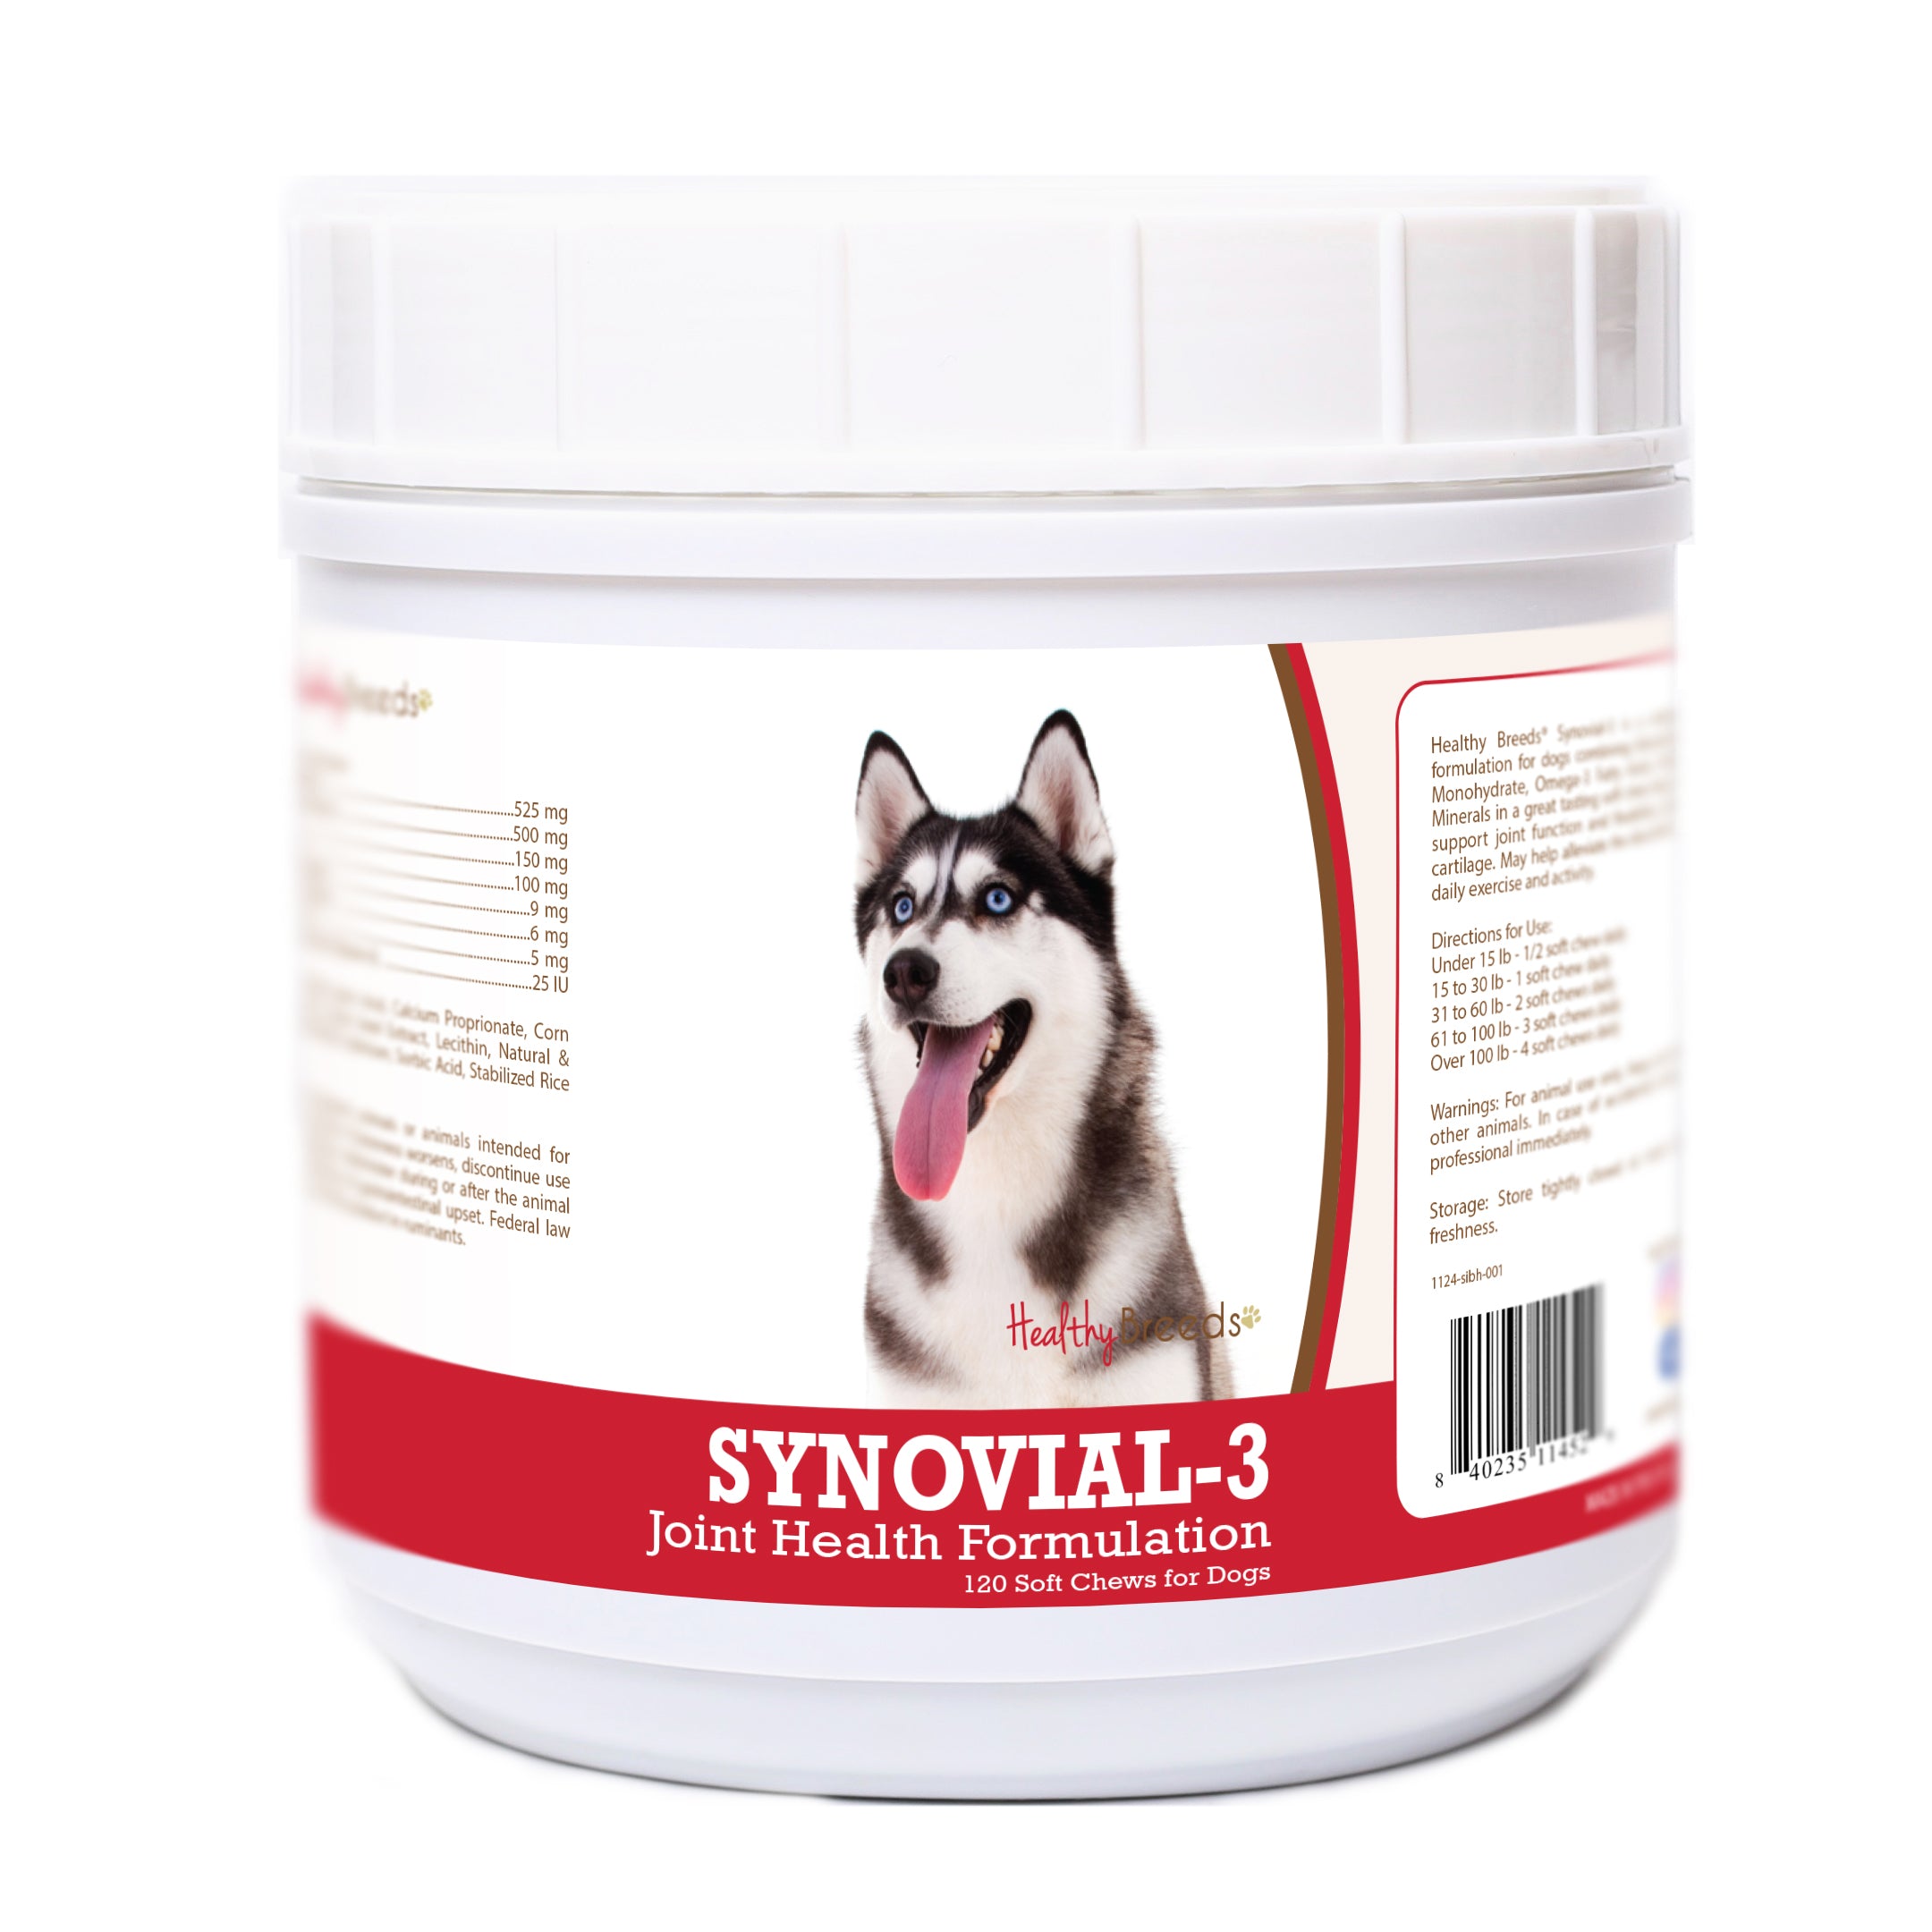 Siberian Husky Synovial-3 Joint Health Formulation Soft Chews 120 Count